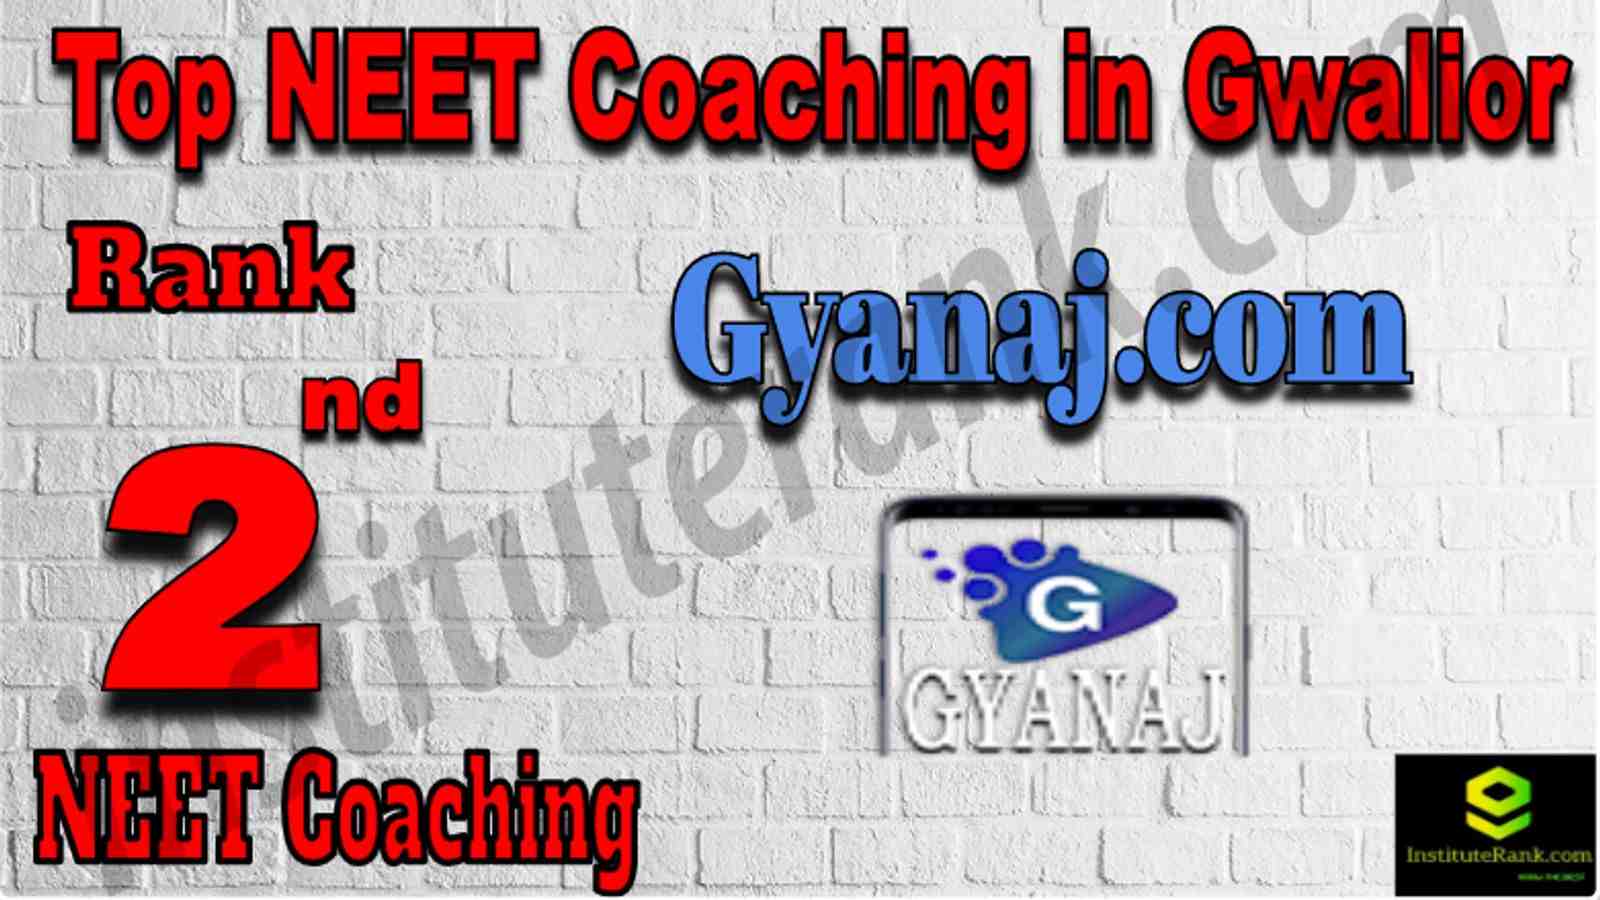 Rank 2 Top NEET Coaching in Gwalior